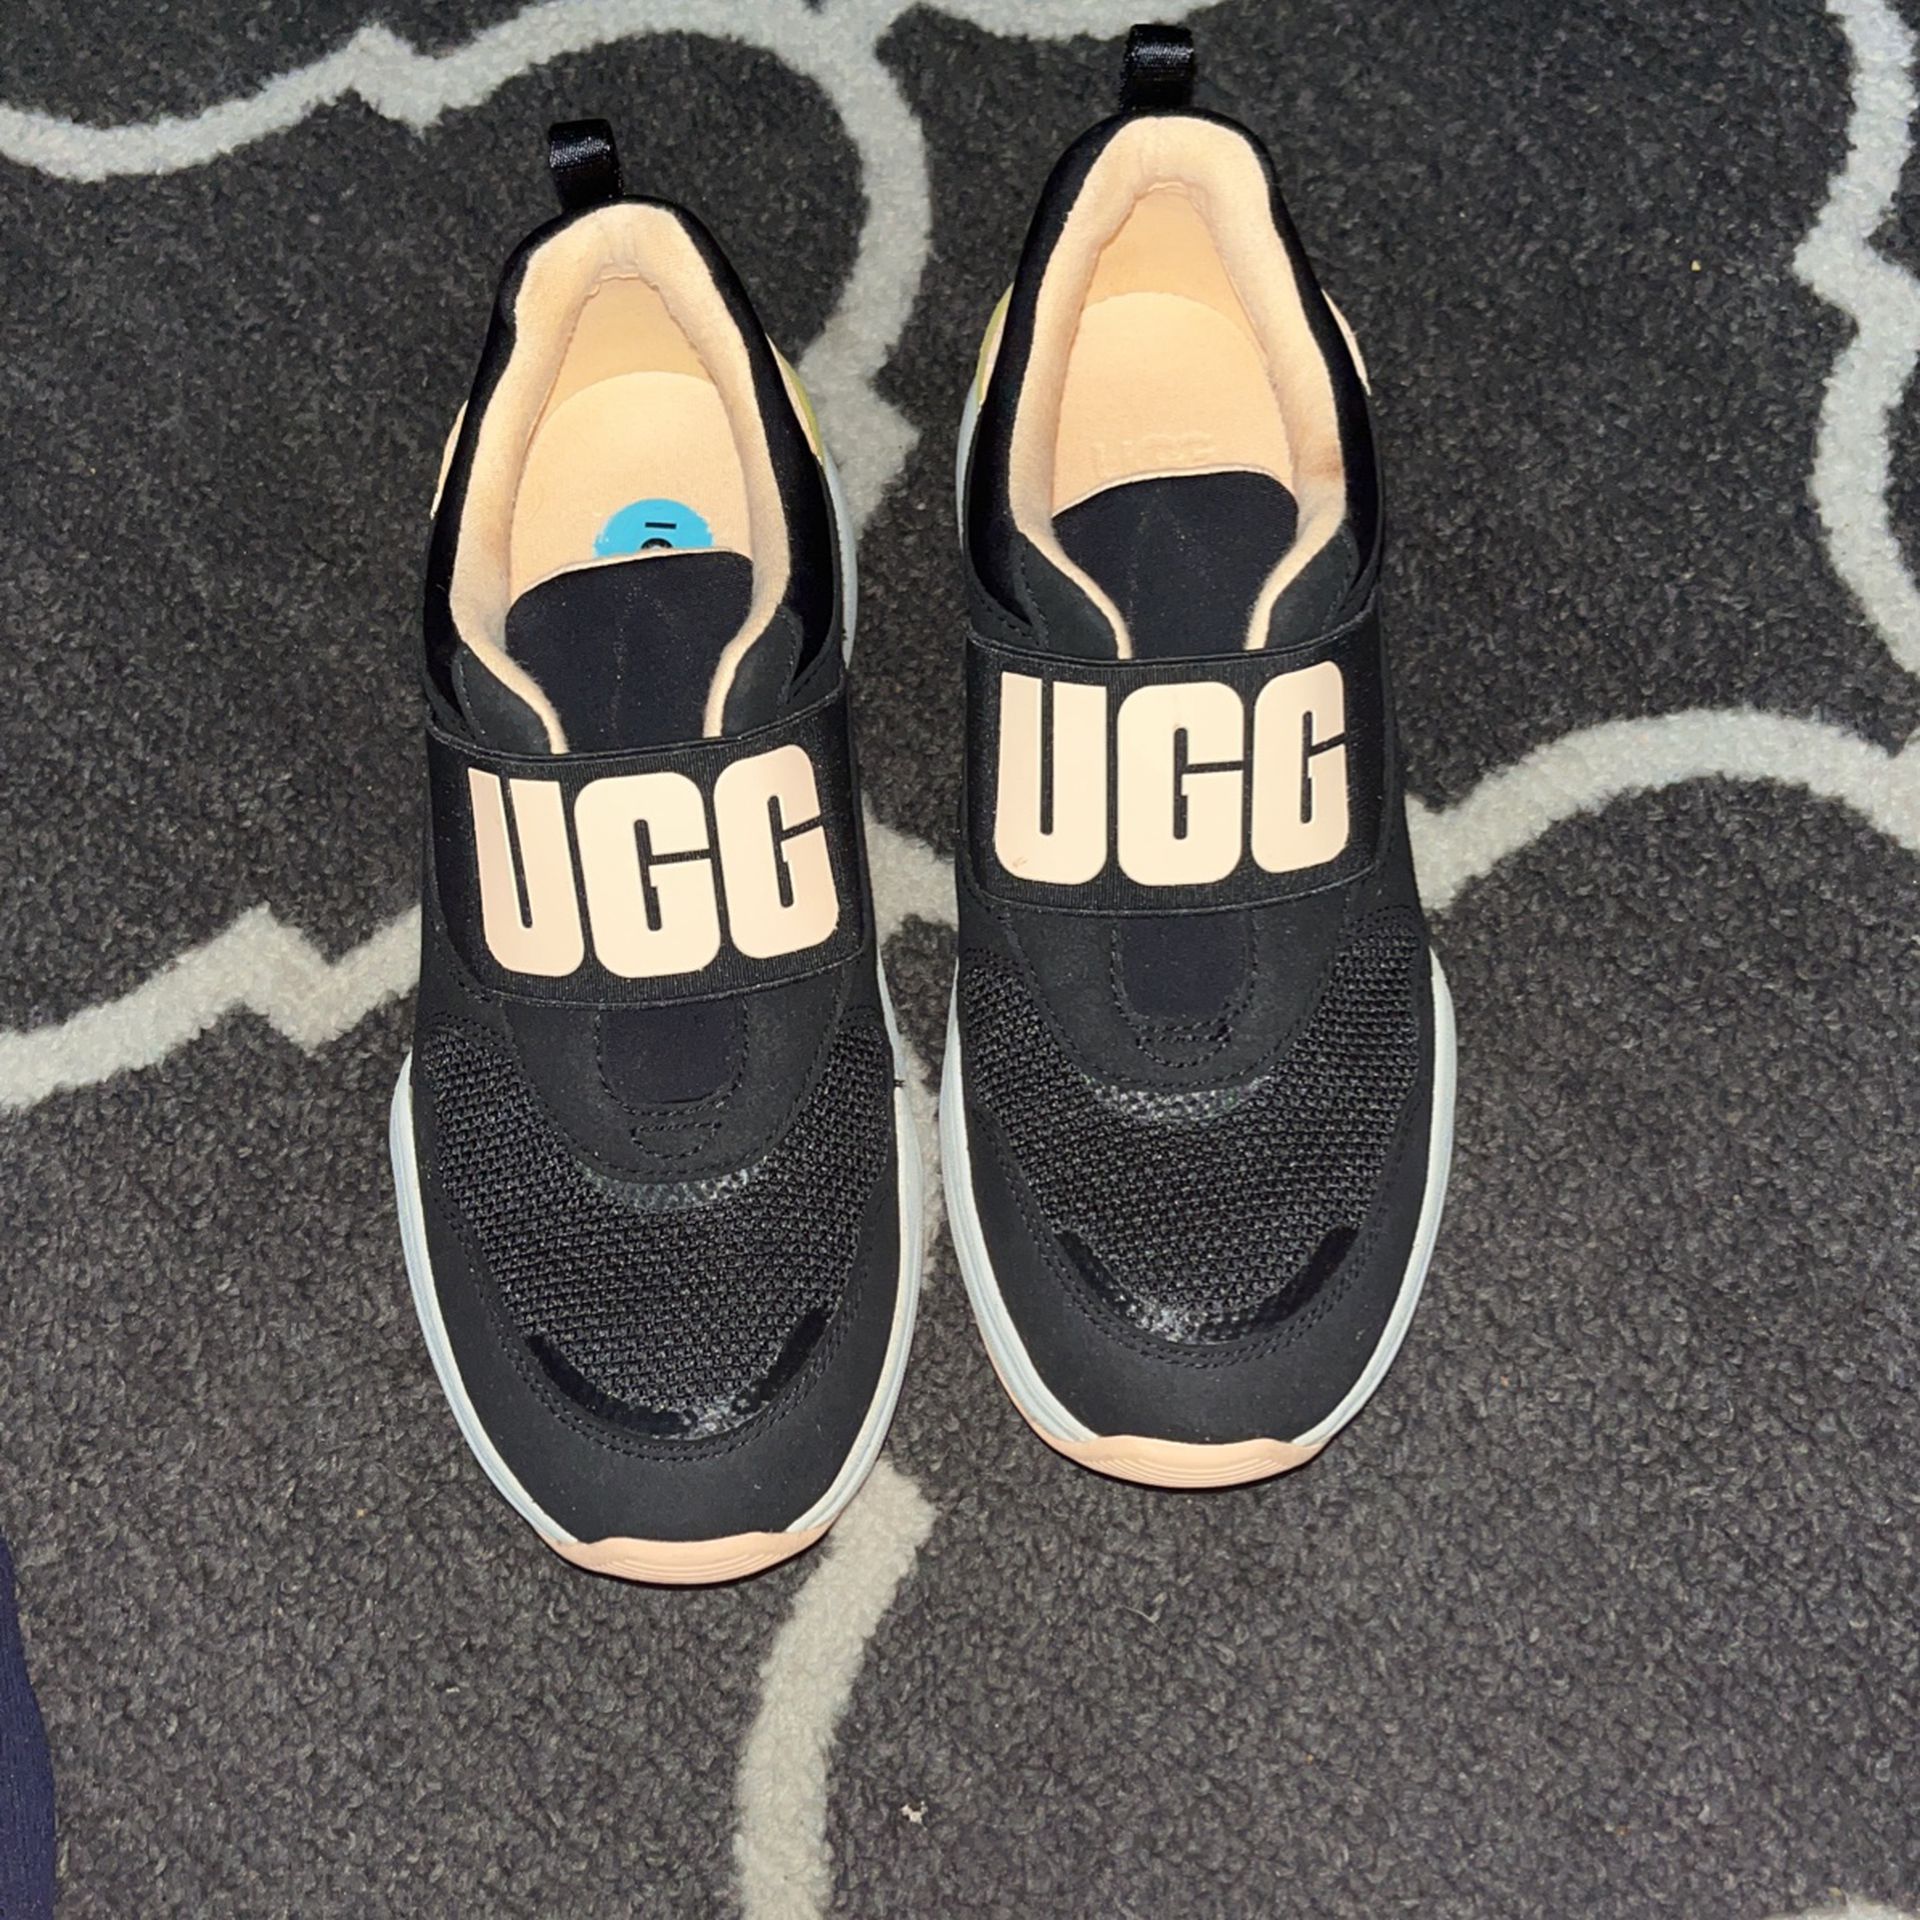 UGG Shoes Size 6